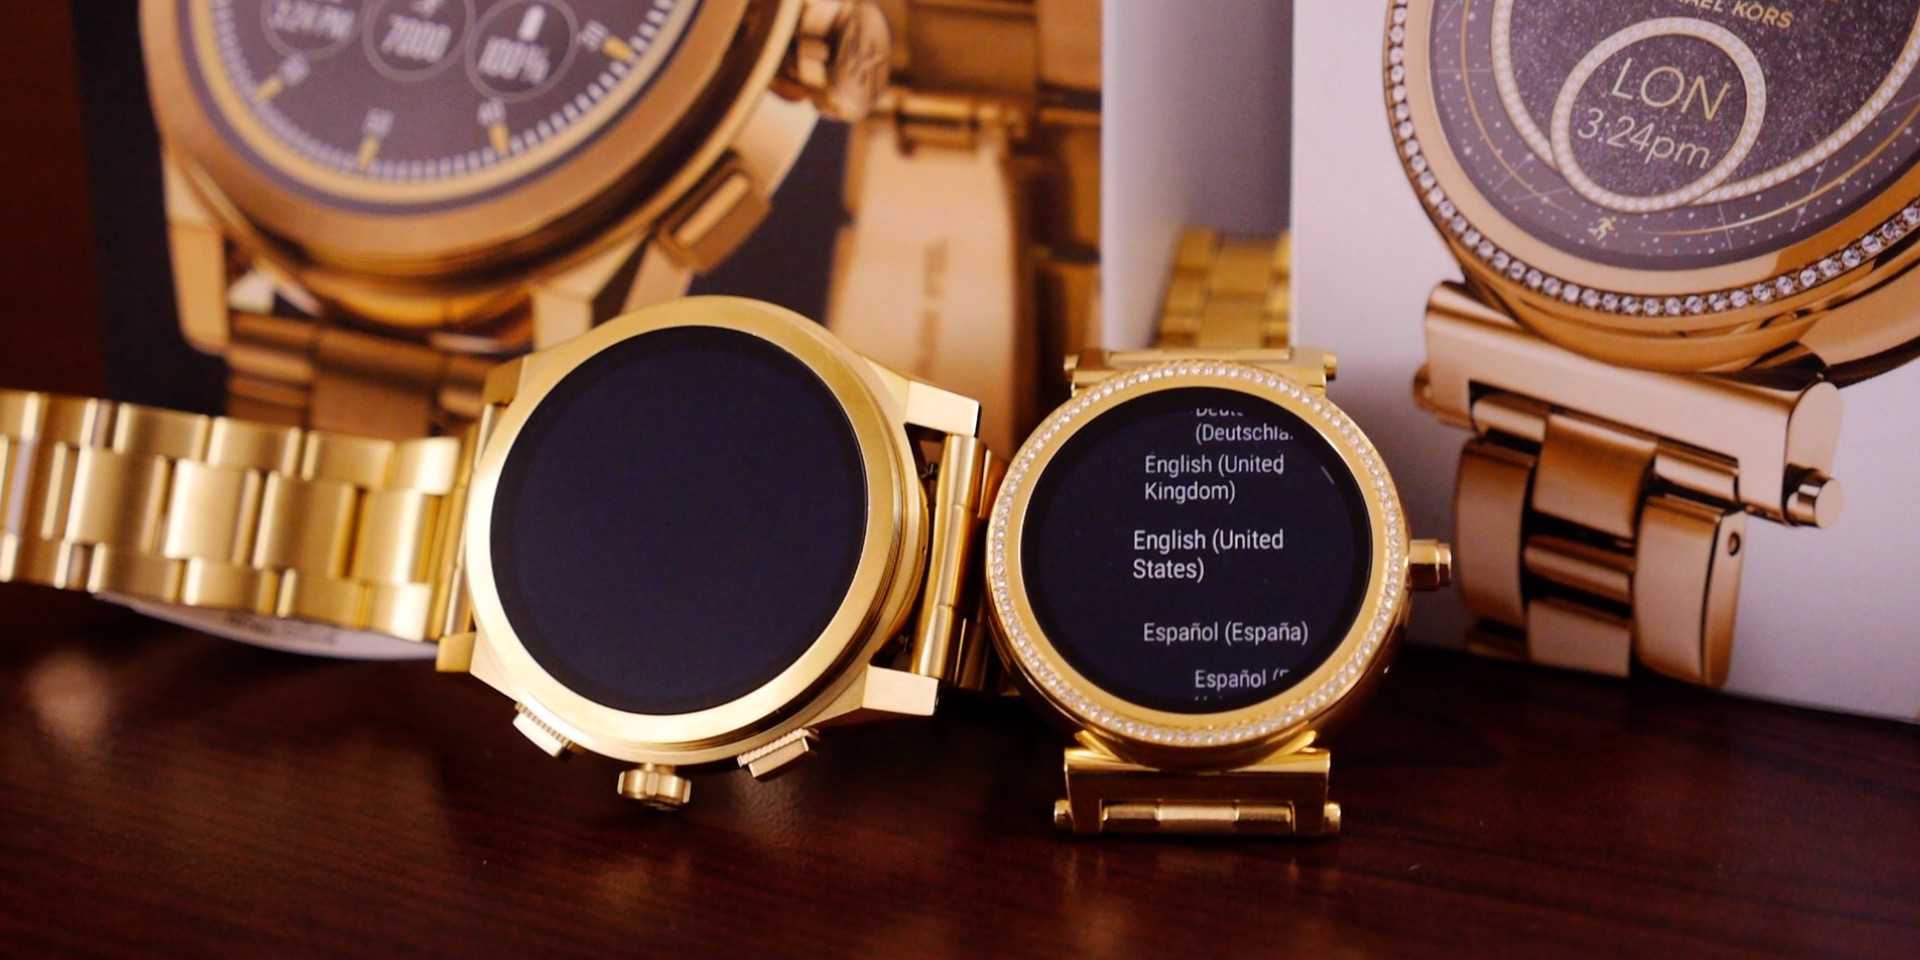 michael kors grayson smartwatch gold